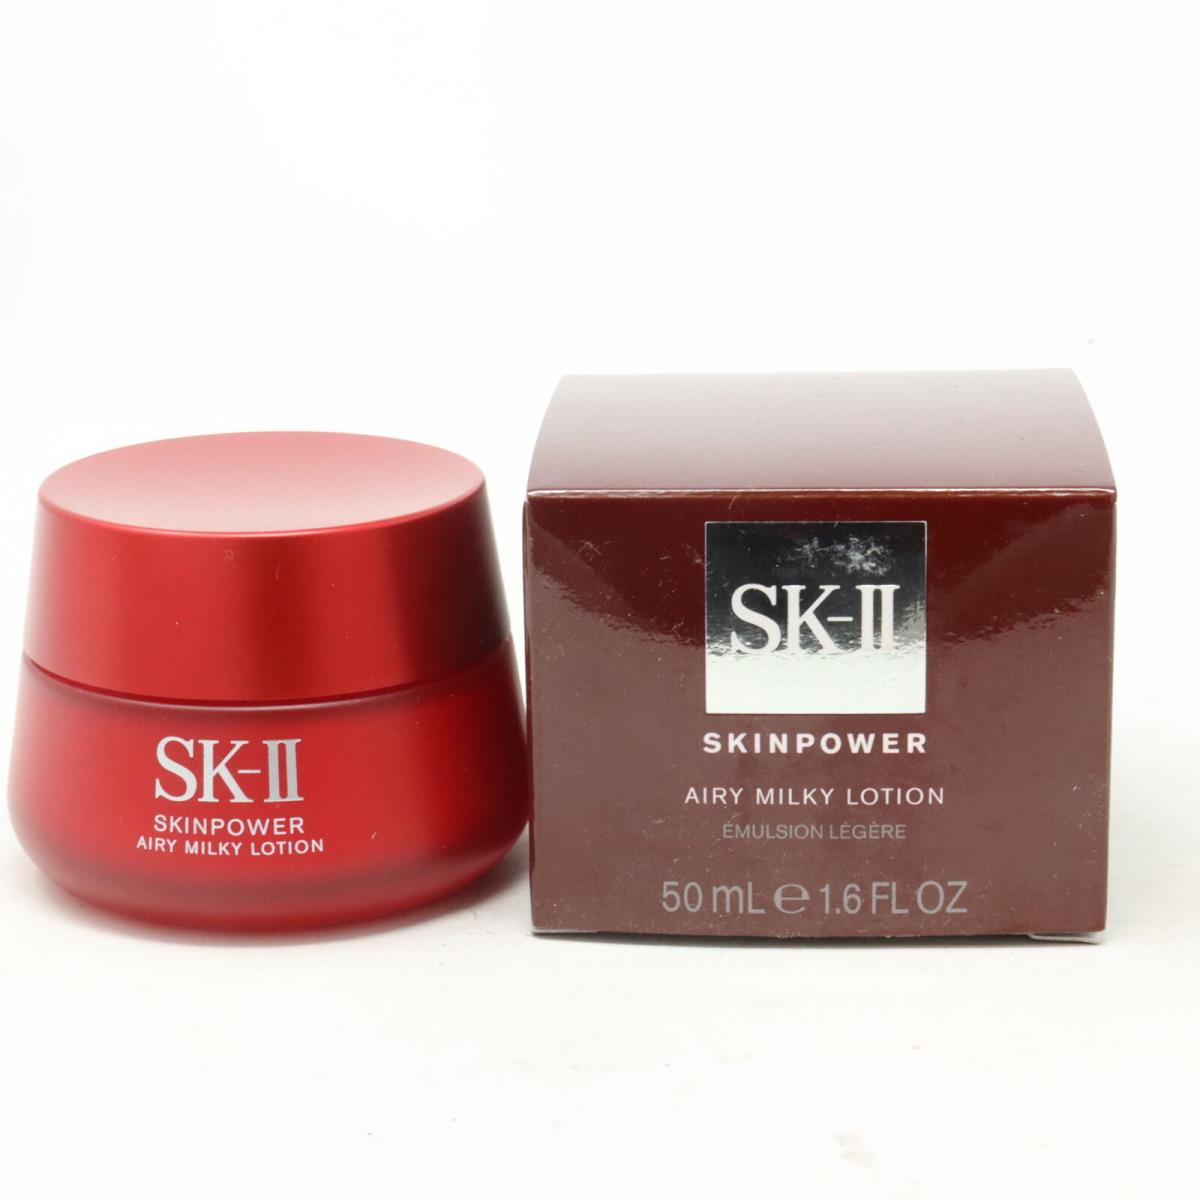 Sk-ii Skinpower Airy Milky Lotion 1.6oz/50ml